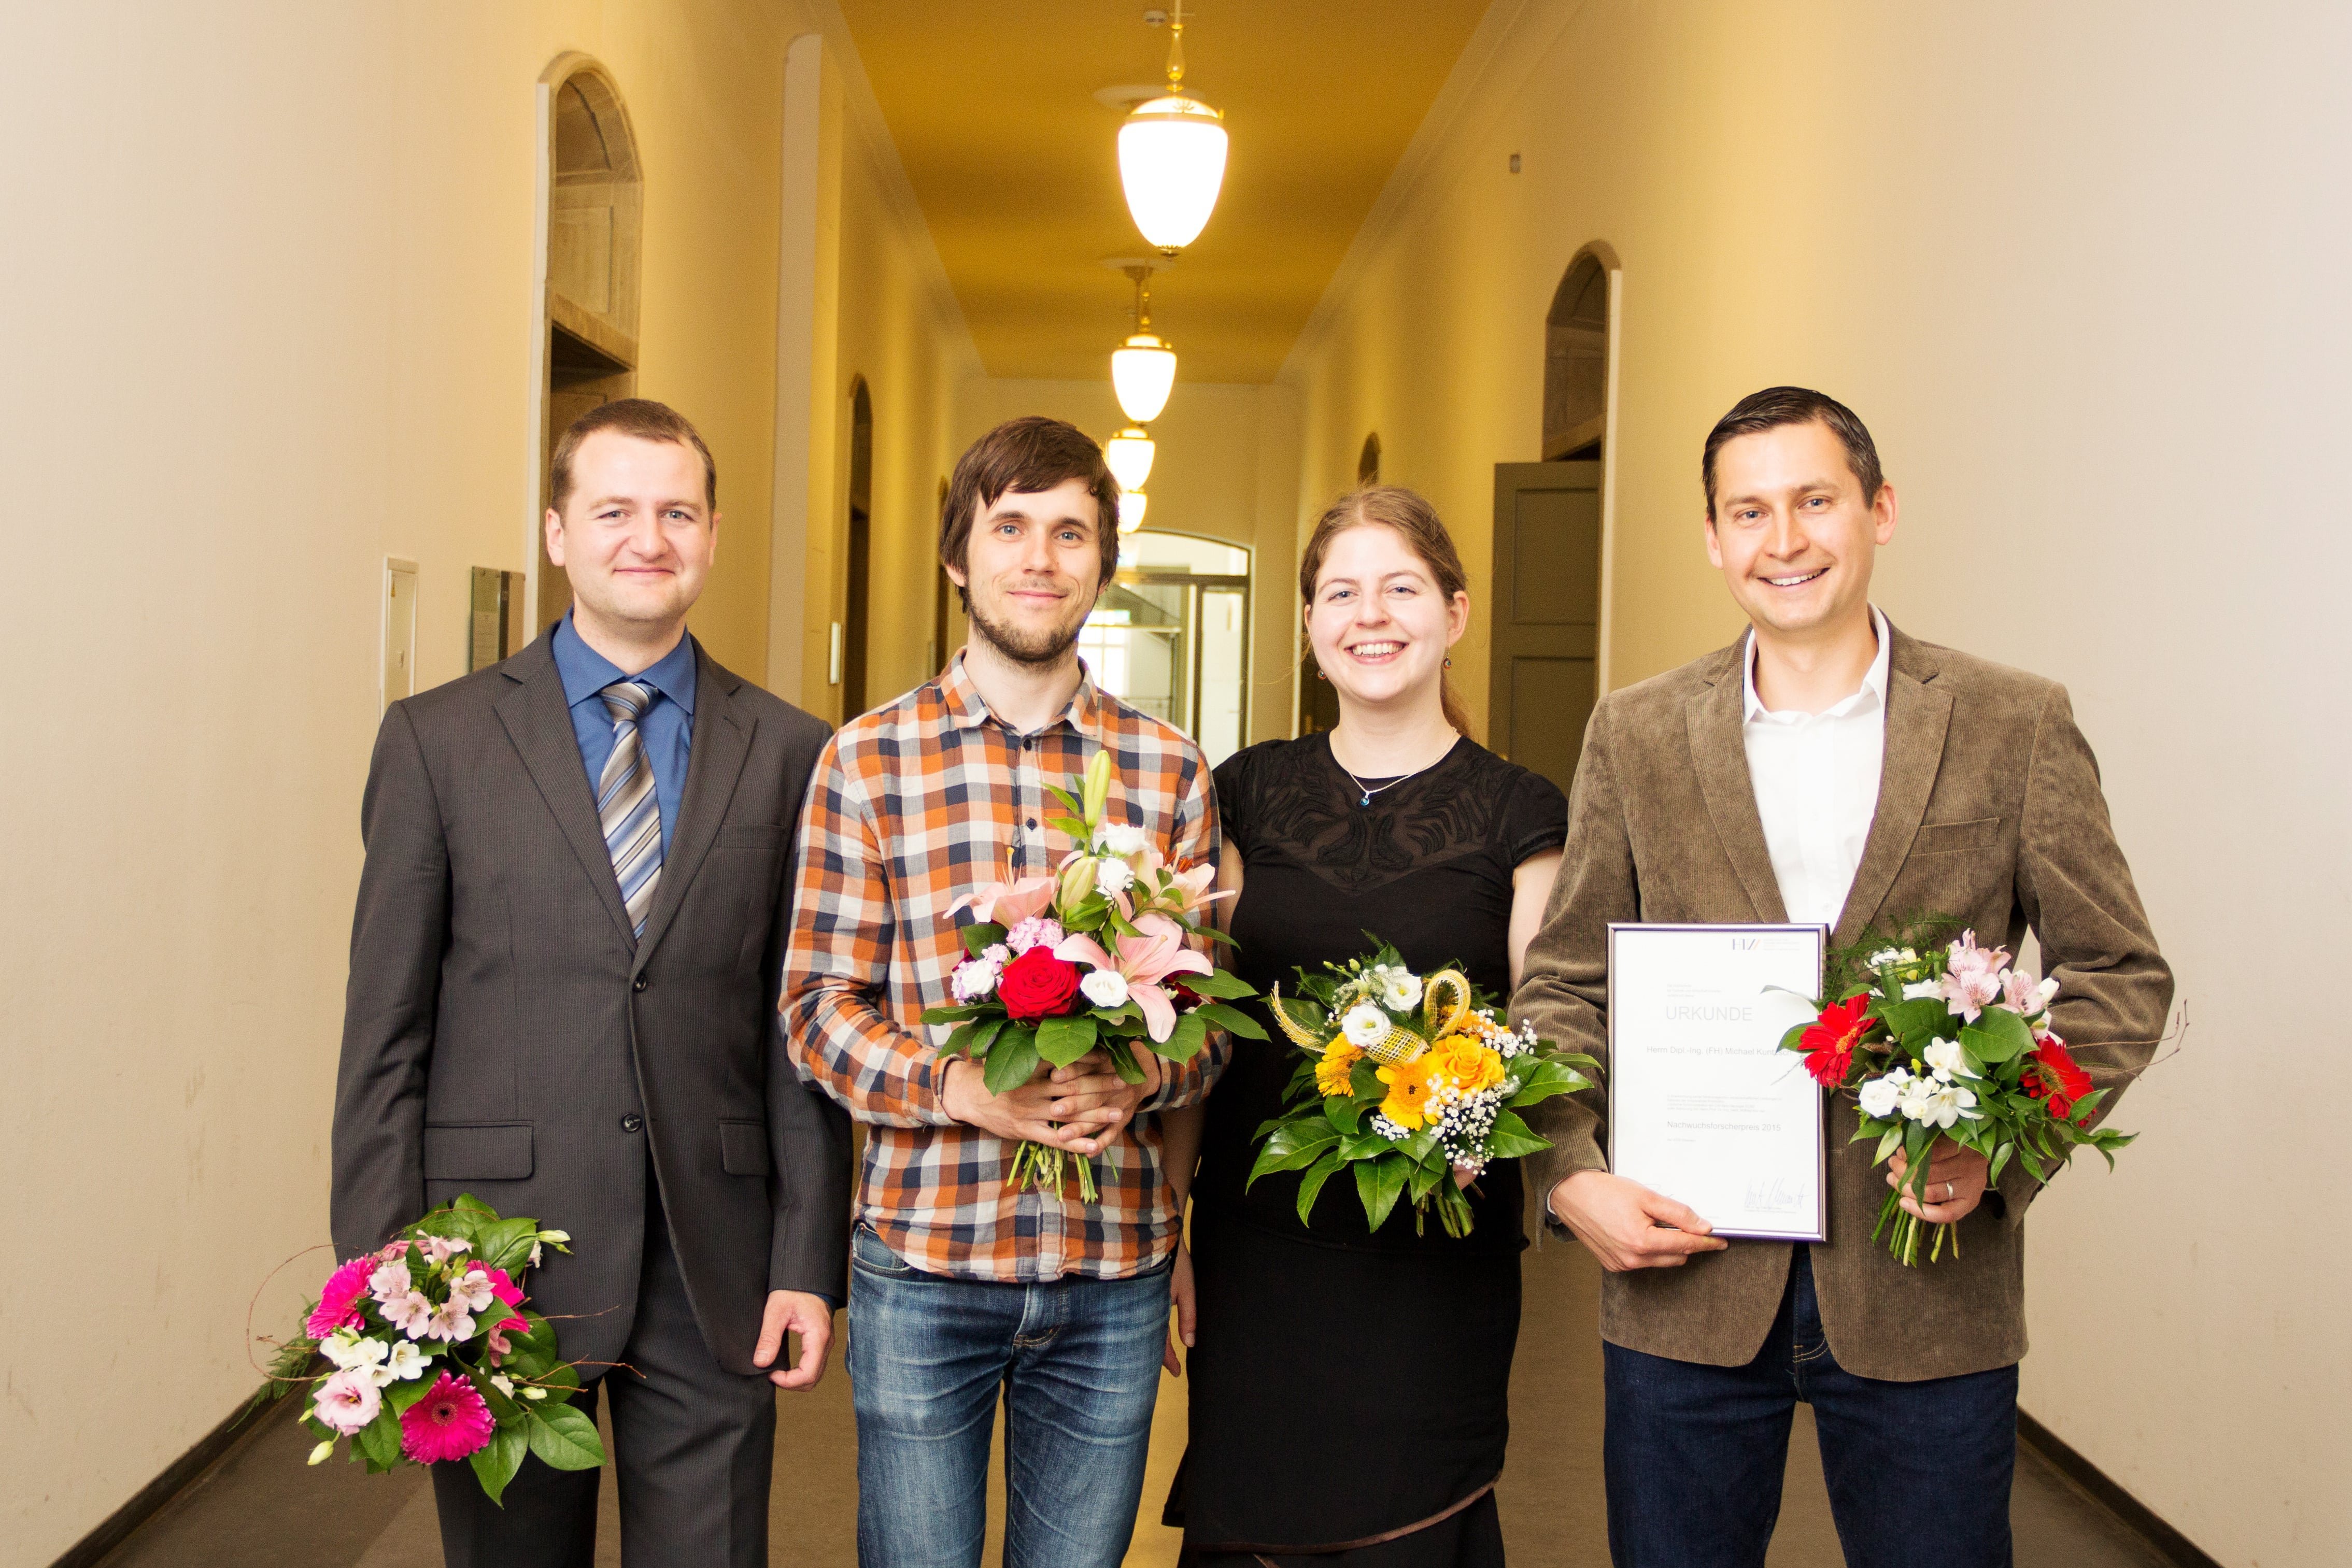 The finalists of the Young Scientists Award 2015: Award winner Michael Kuntzsch next to Thomas Neumann, Loreen Pogrzeba, Wolfgang Wiebel